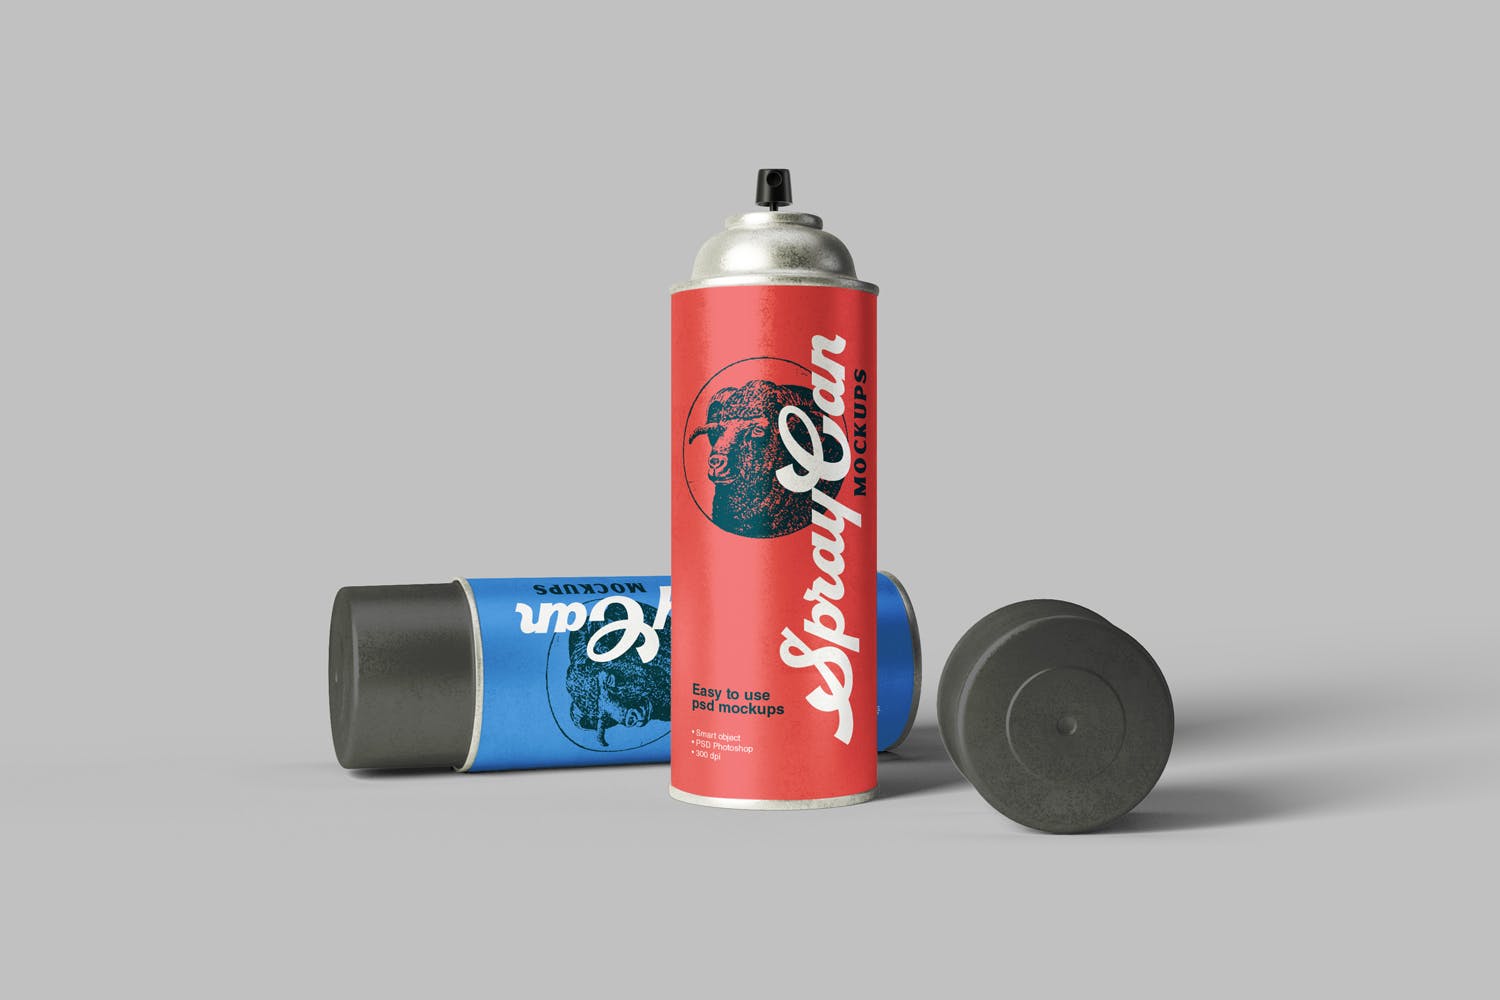 液压喷雾罐外观设计样机模板 Spray Can Mockups插图(4)